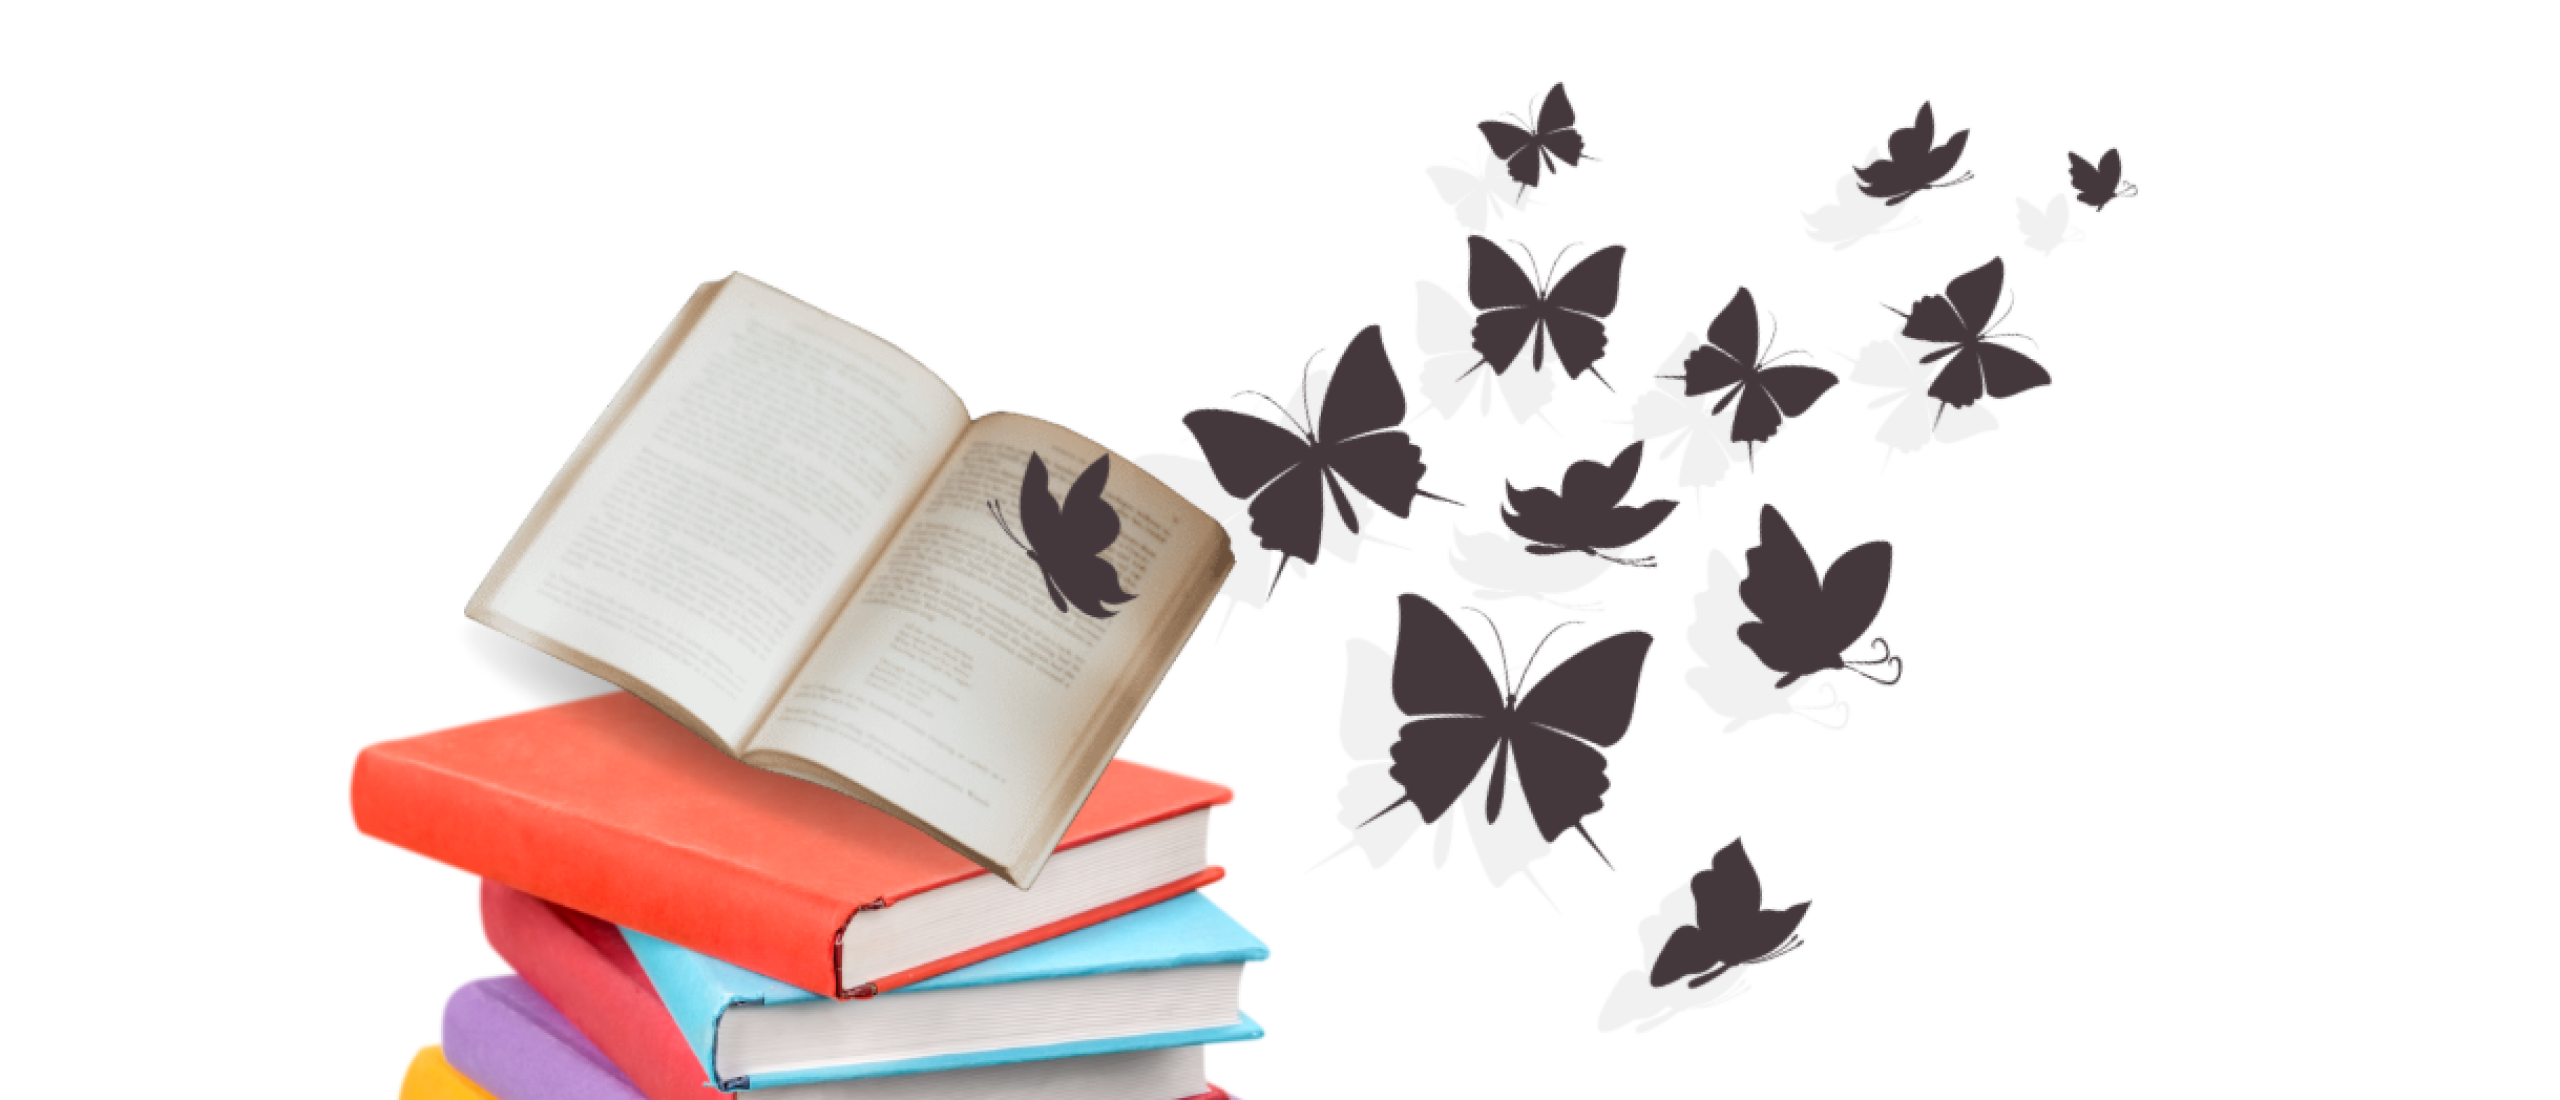 Stapel boeken met vlinders